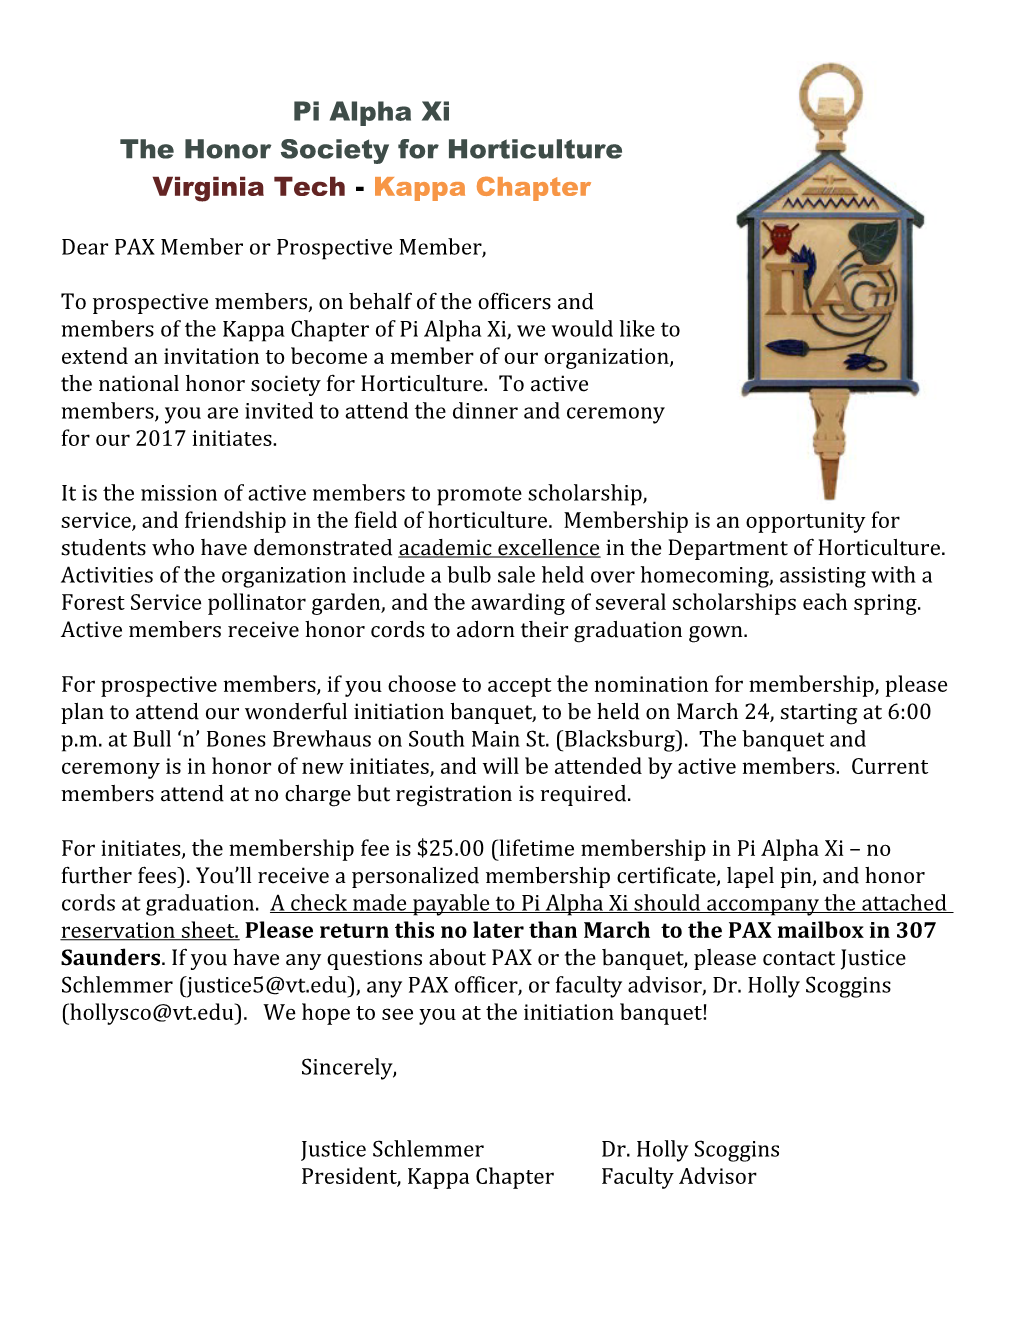 Virginia Tech - Kappa Chapter